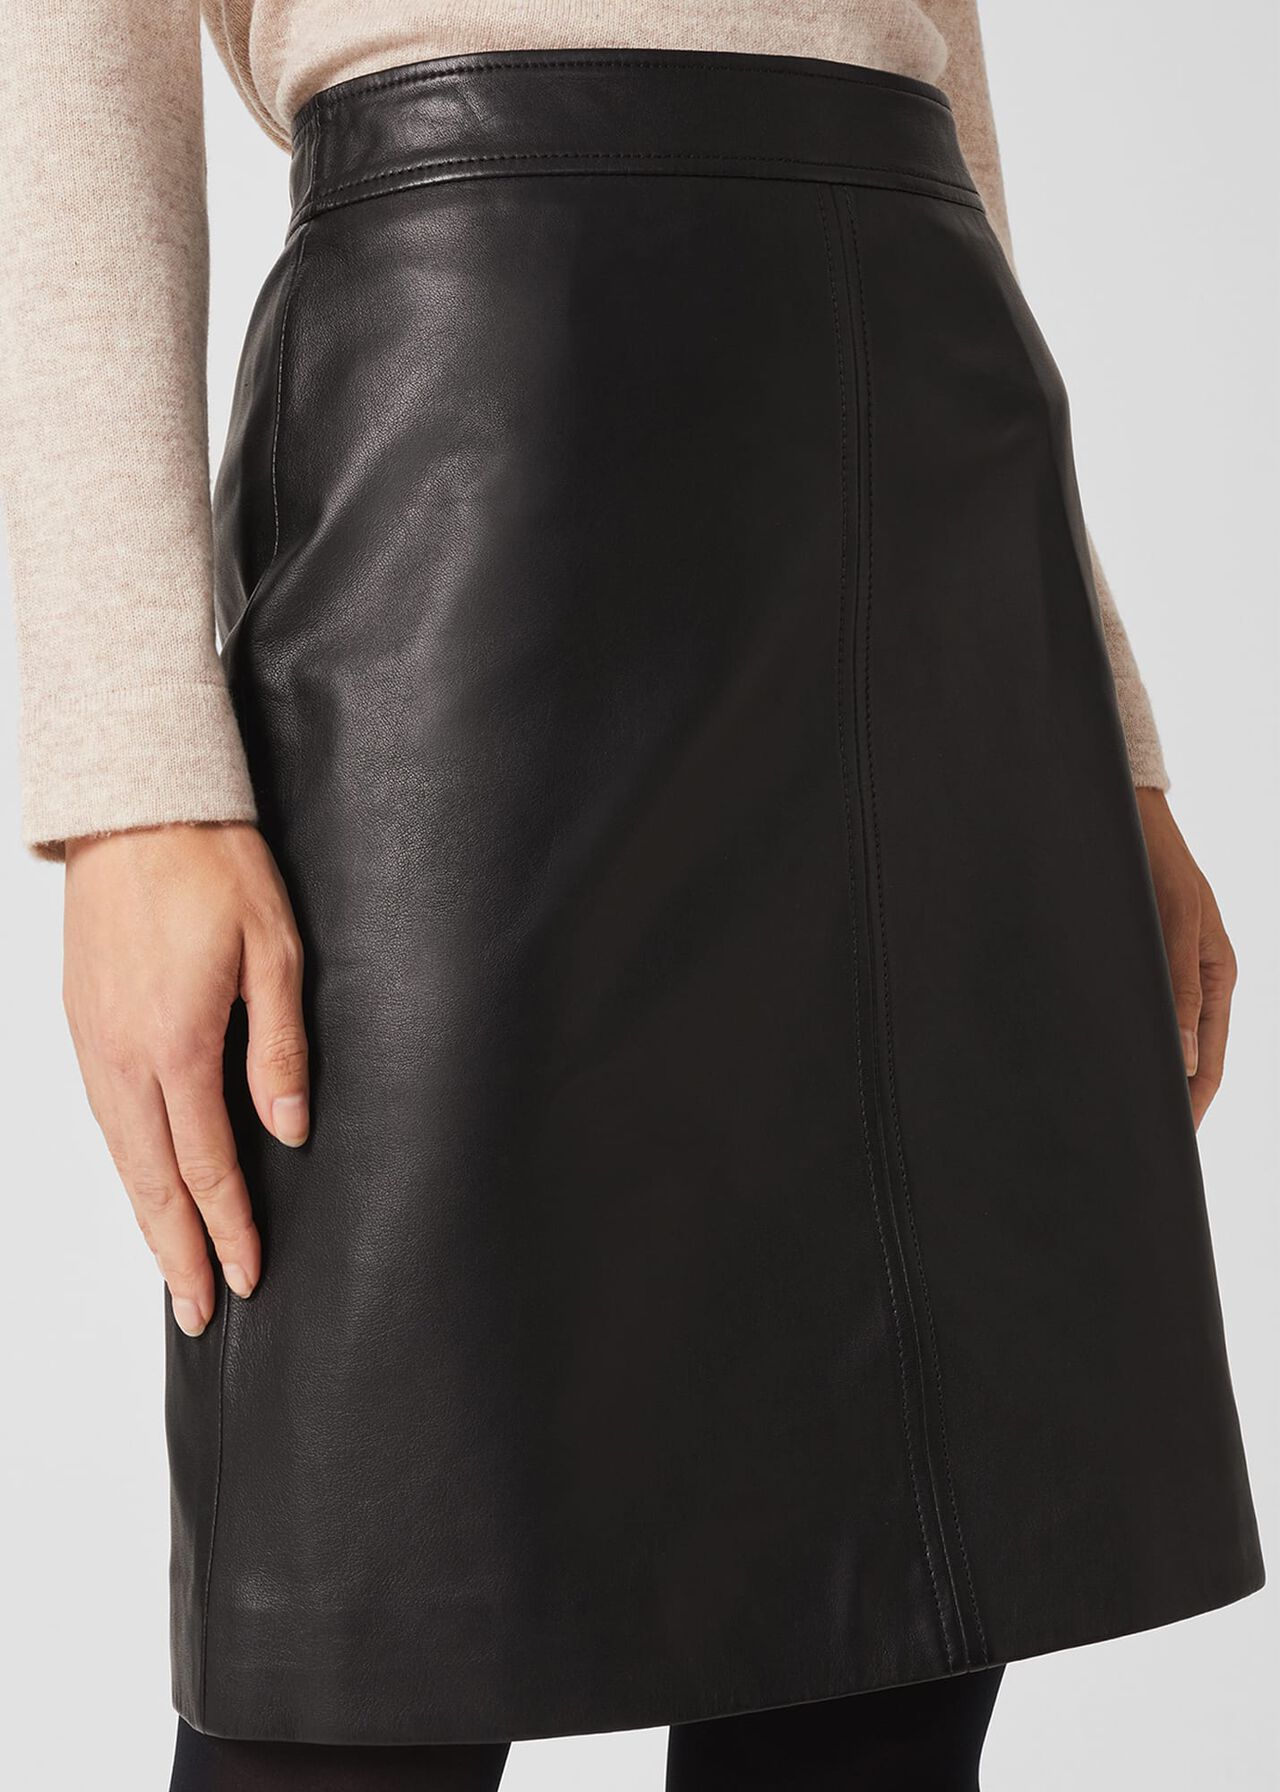 Petite Annalise Skirt, Black, hi-res